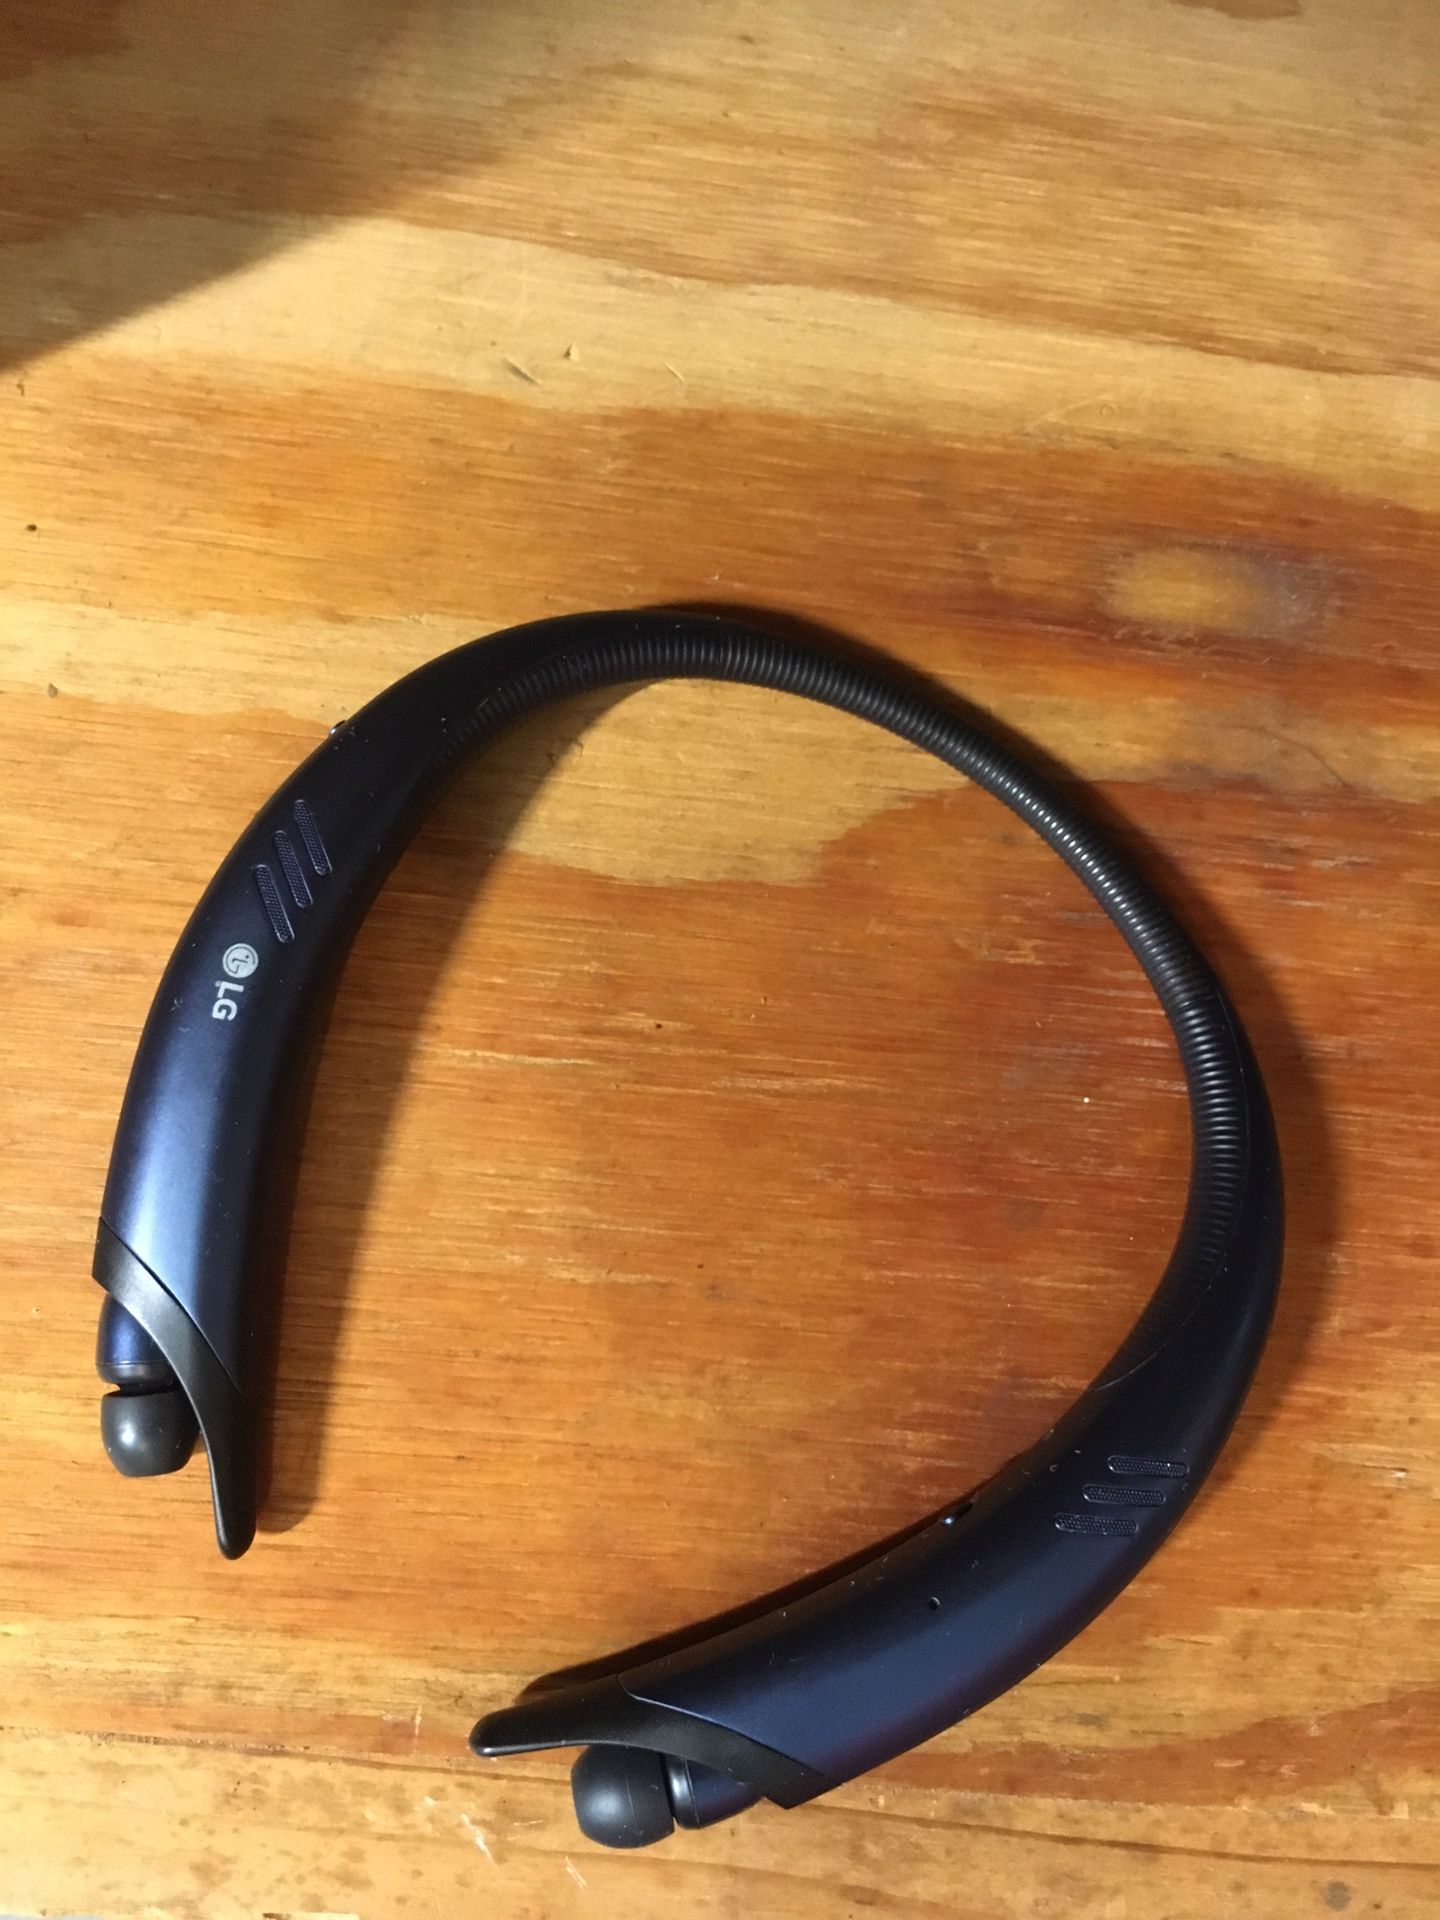 Lg A100 Bluetooth headset headphones